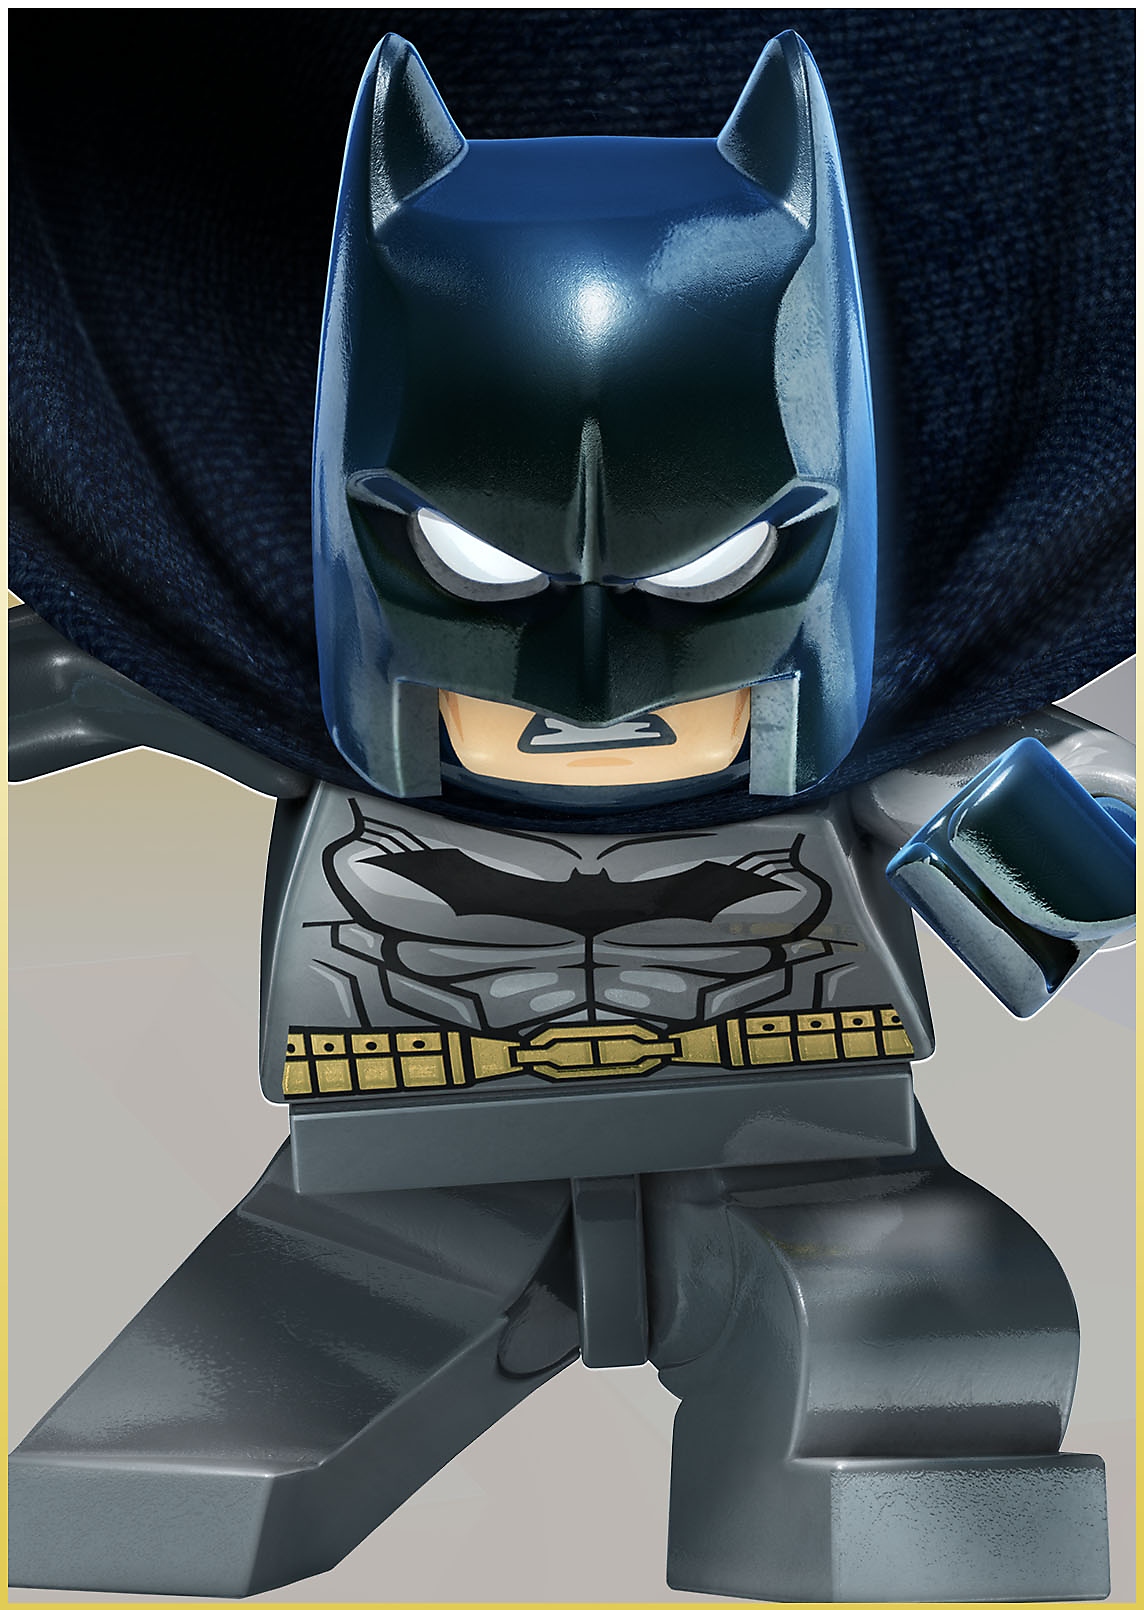 Lego Batman śmiga w dół